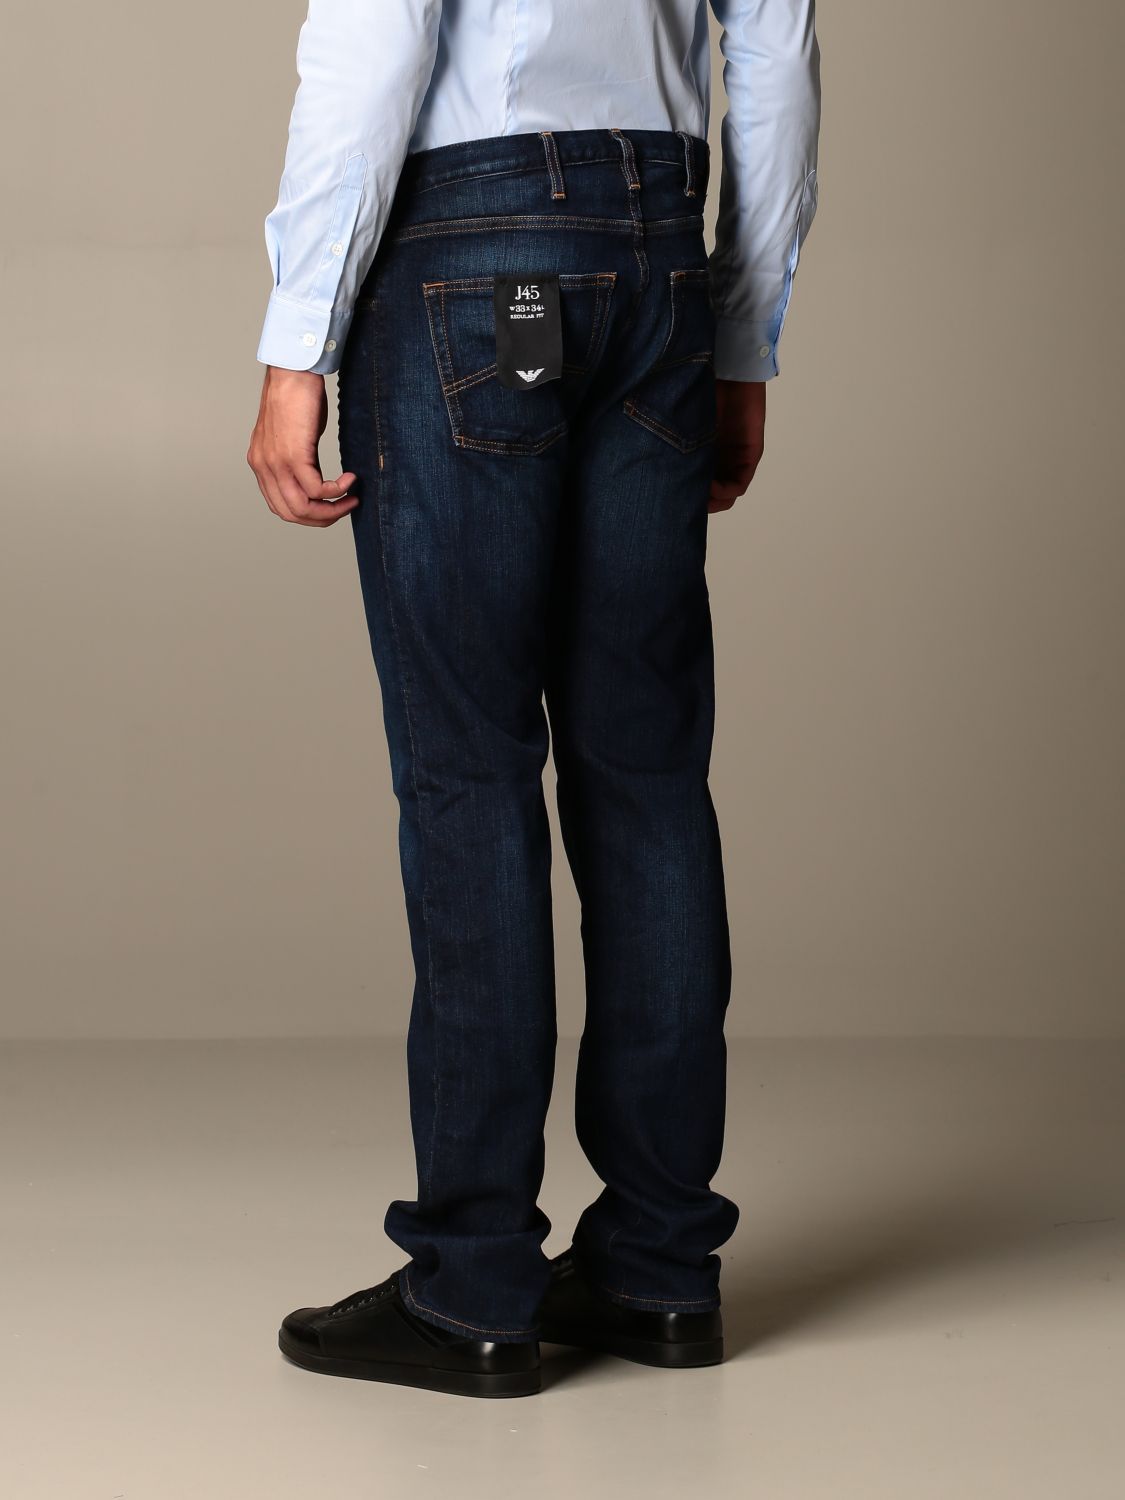 Outlet de Emporio Armani: Jeans hombre, Denim | Jeans Emporio Armani 8N1J45 1V0LZ en línea GIGLIO.COM